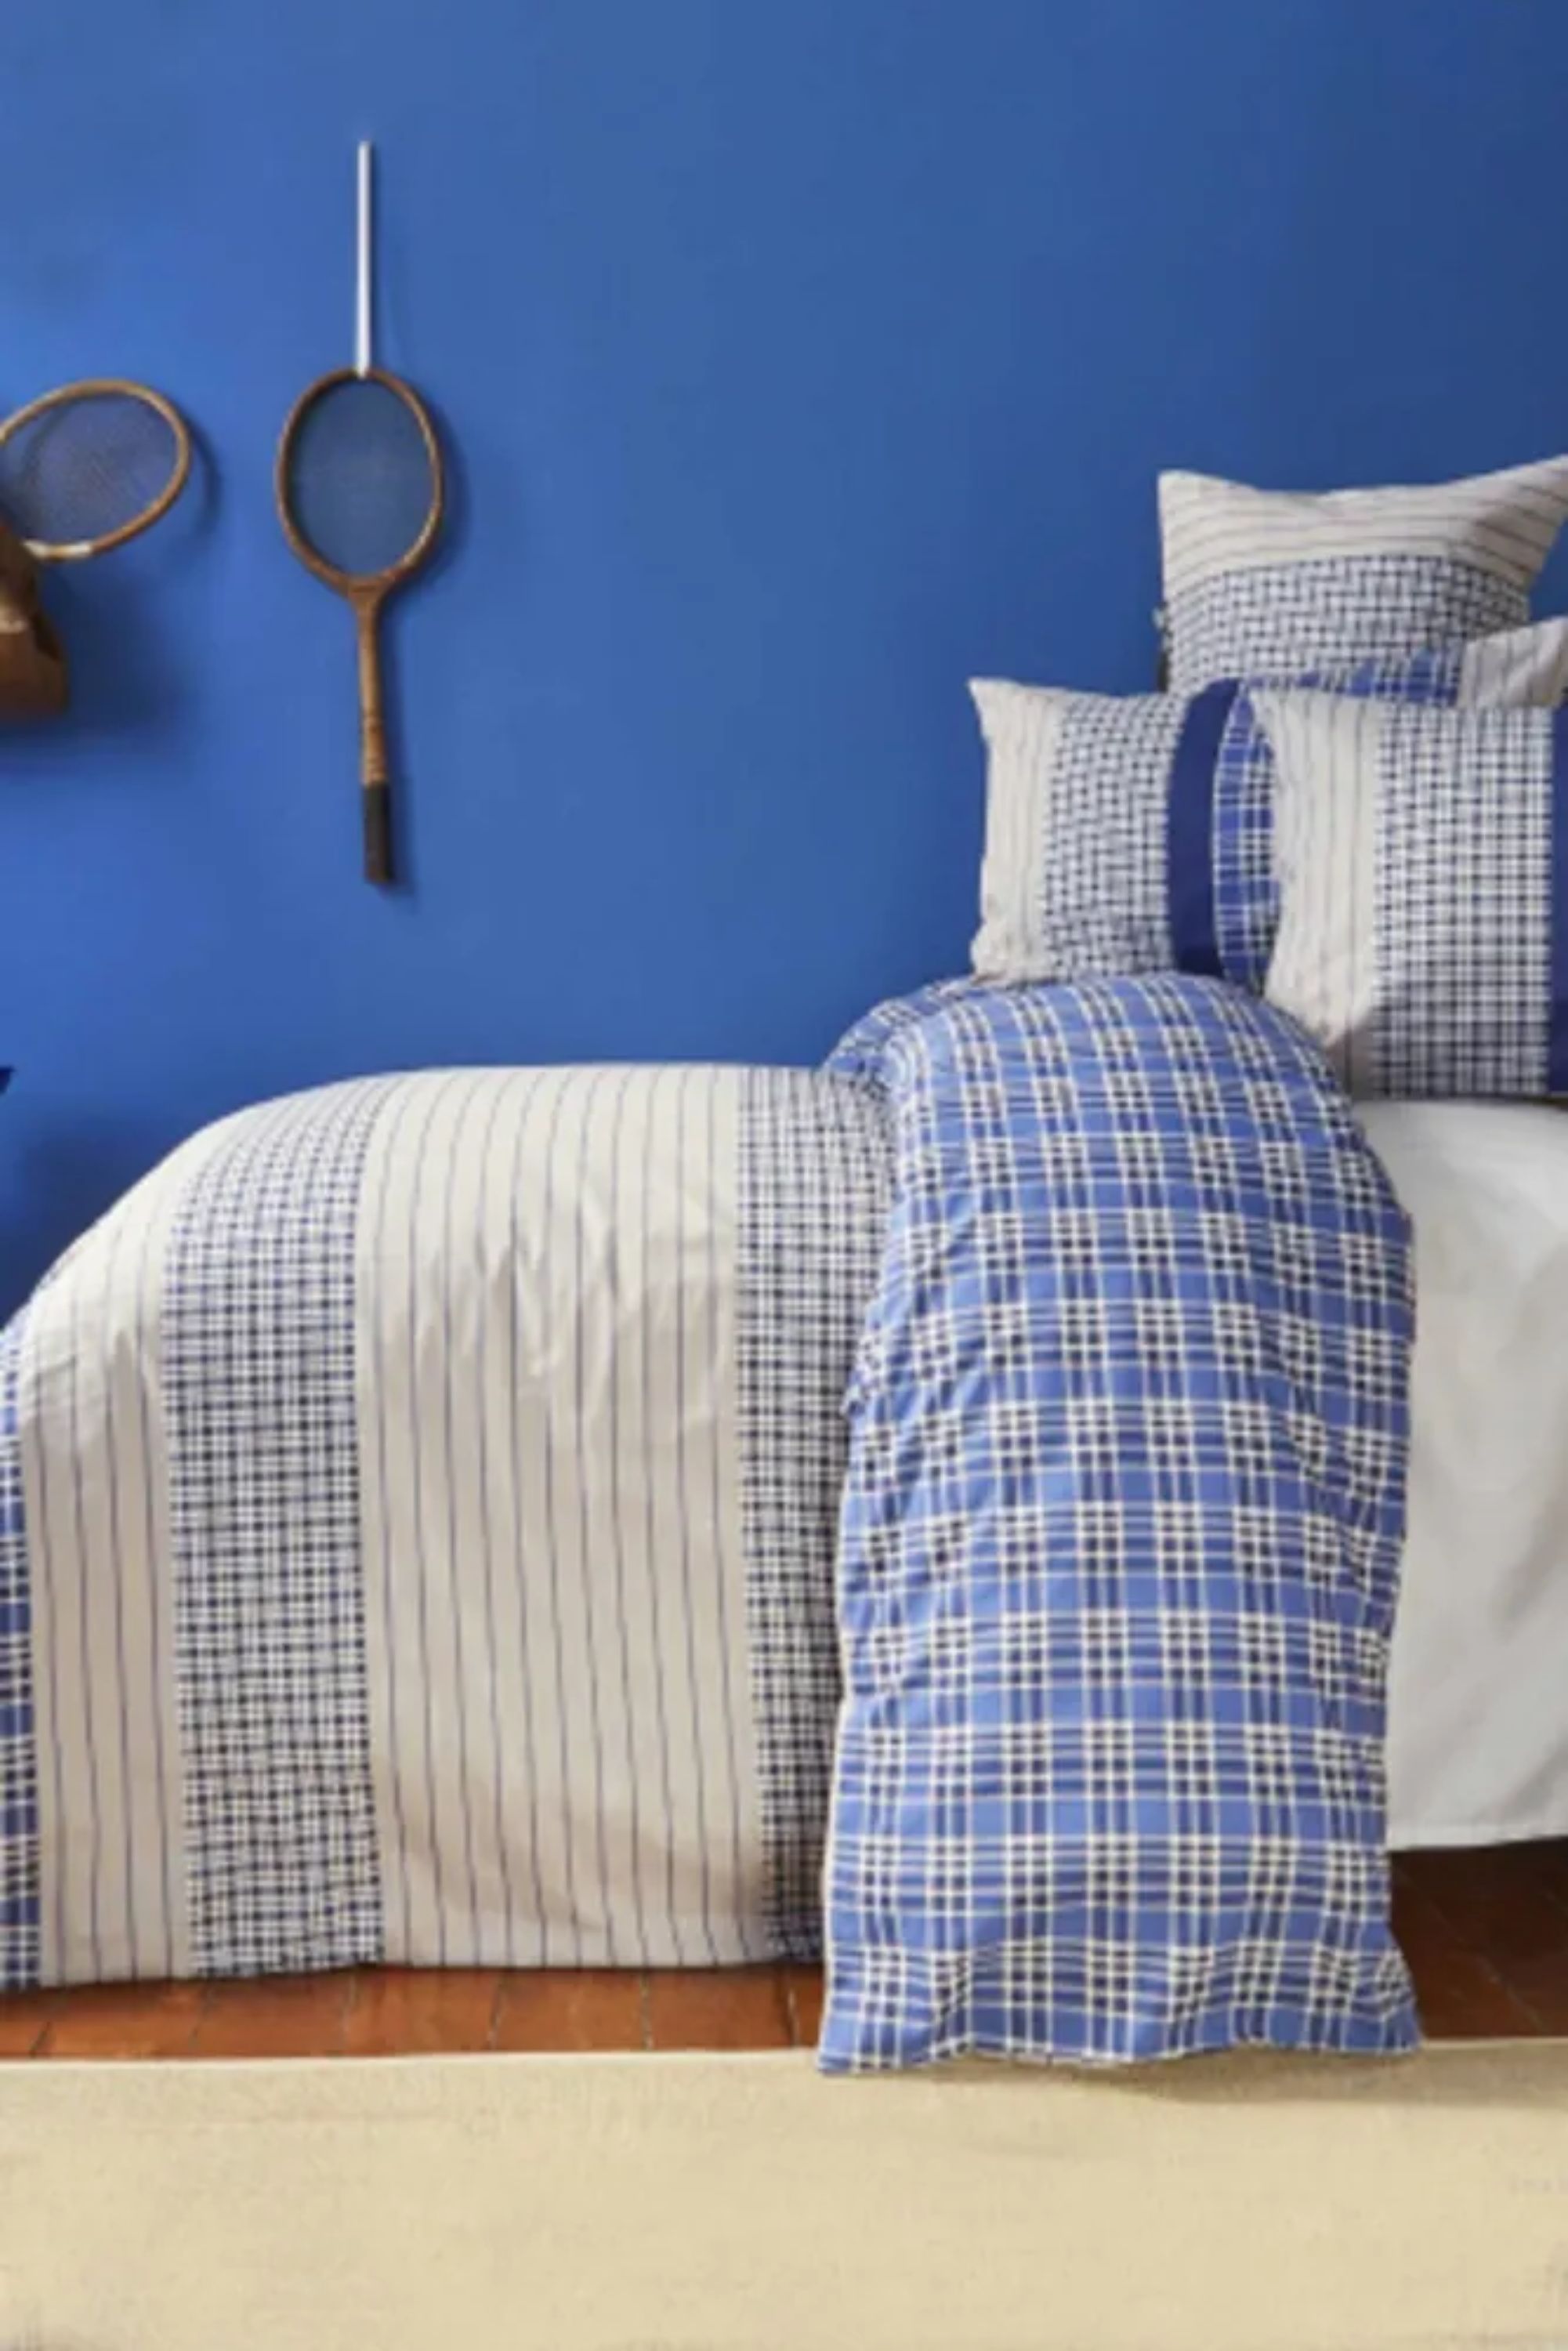 Eco-friendly Nautica Pillows: 15 Surprising Ways They